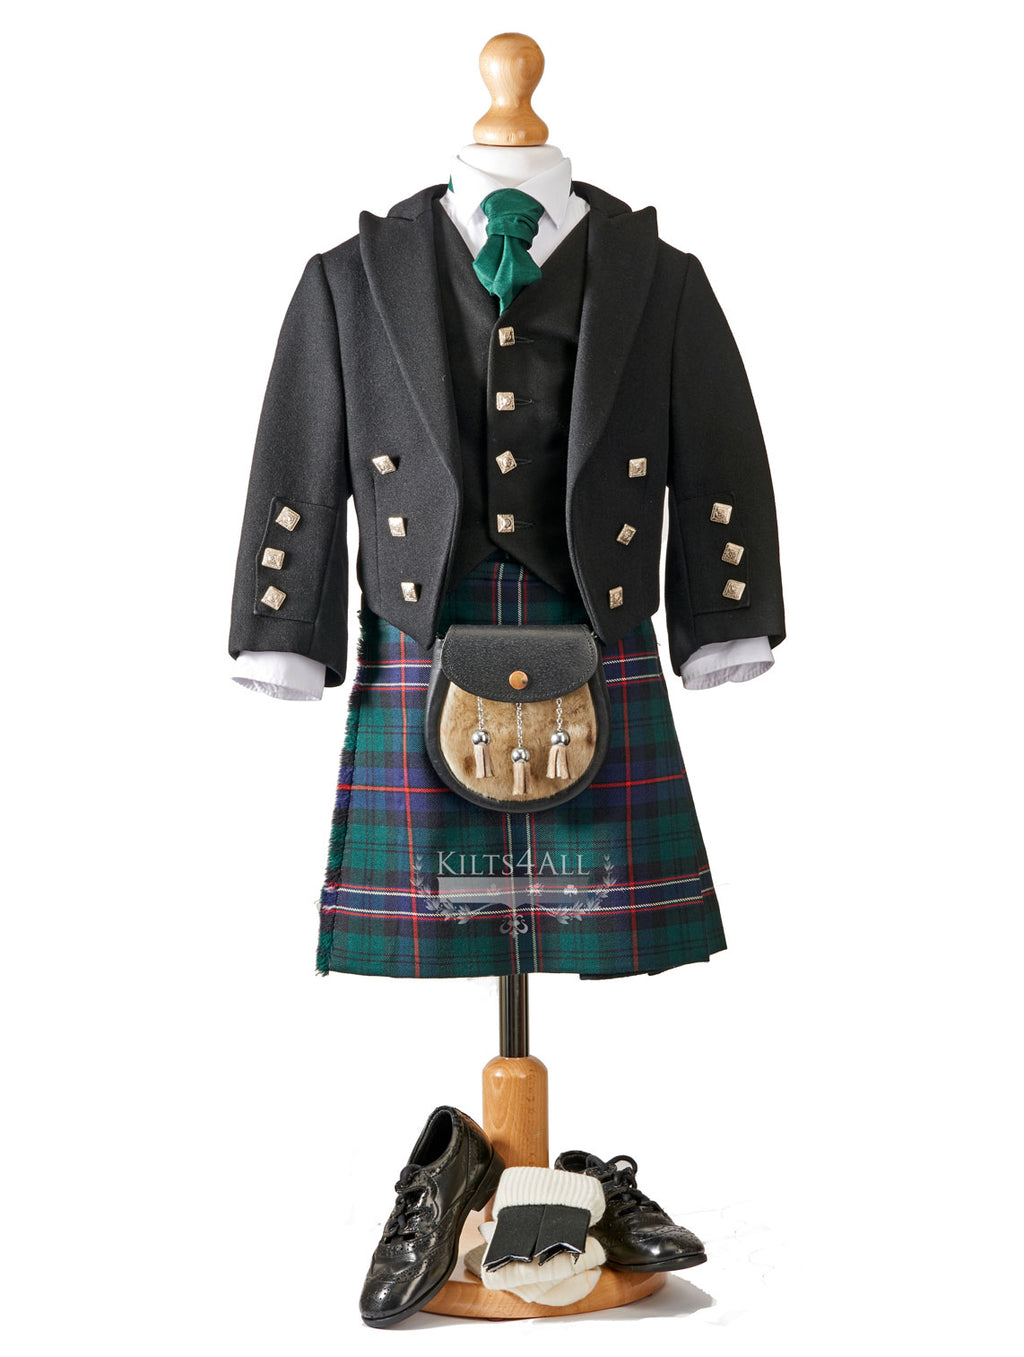 Boys Tartan Kilt Outfit to Hire - Prince Charlie Jacket & 5 Button Waistcoat